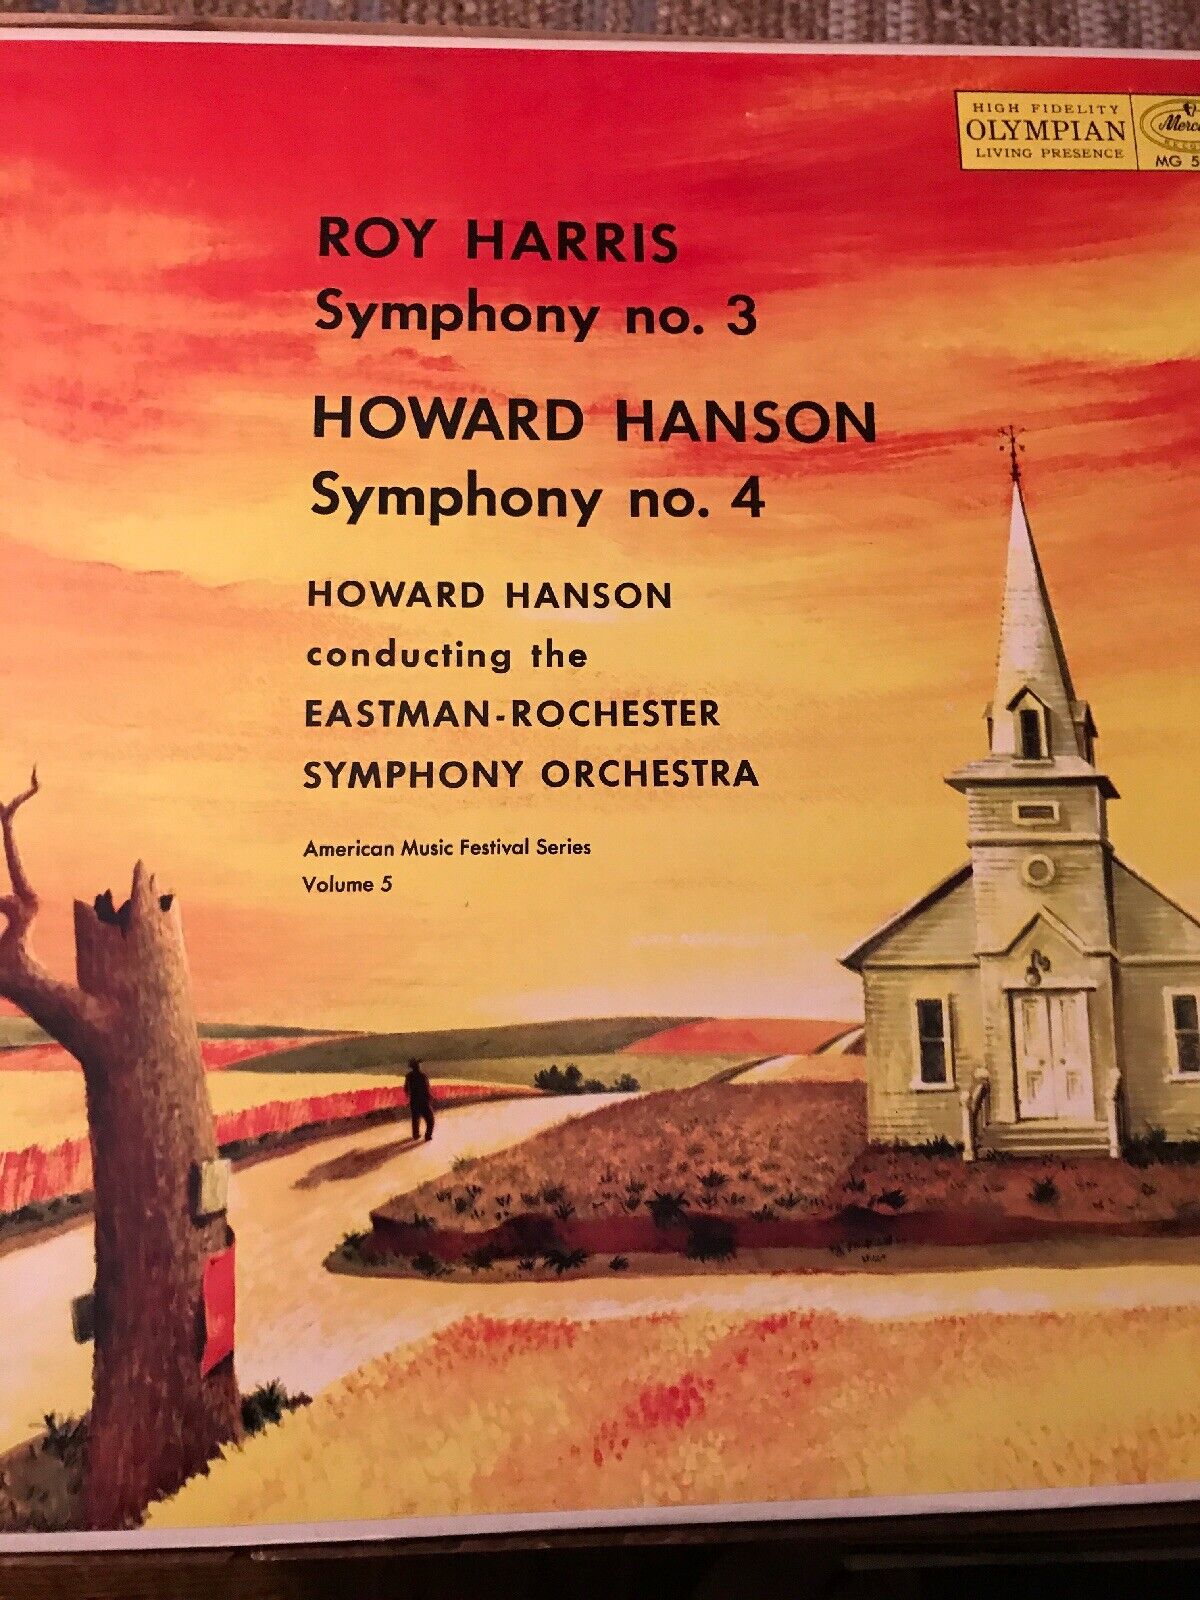 Vintage HOWARD HANSON SYMPHONY NO. 4 & ROY HARRIS SYMPHONY NO. 3 LP - 1956